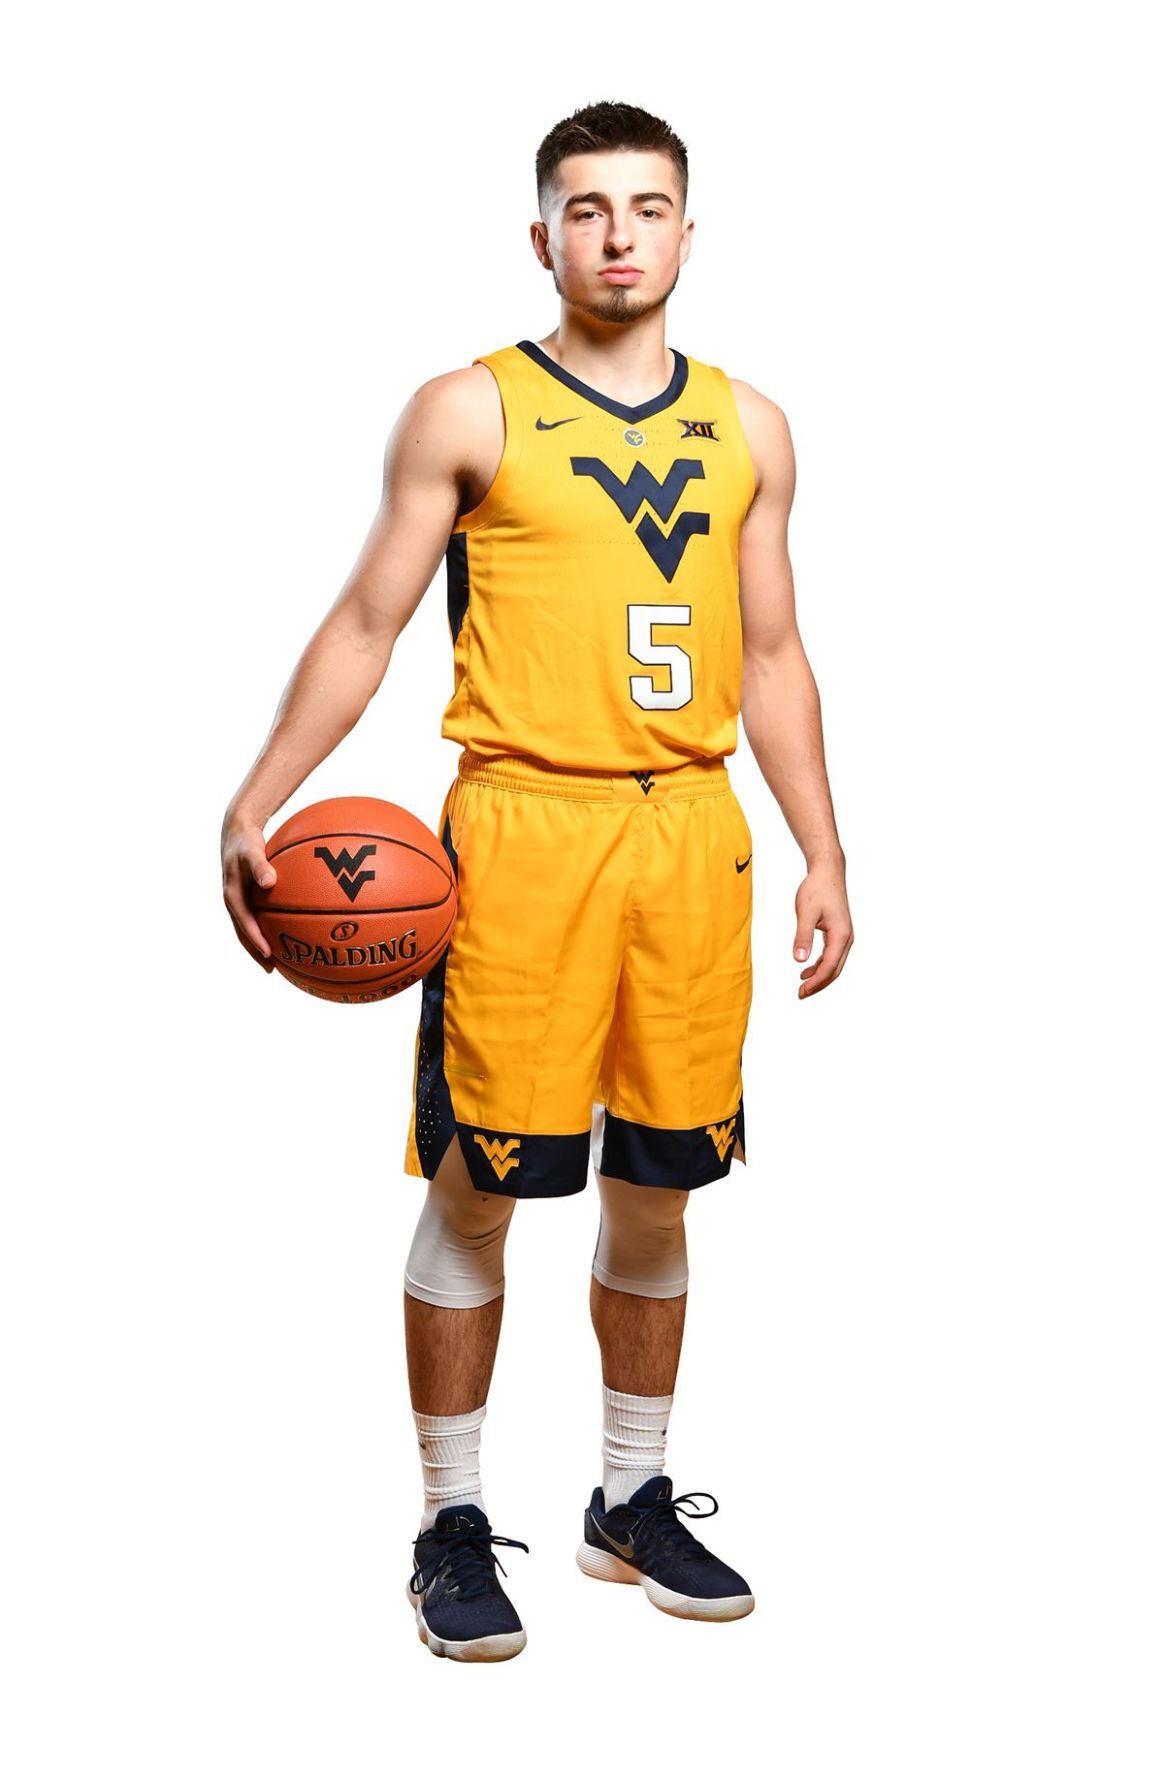 WVU basketball: Flashy freshman McCabe ready to make Mountaineer debut | WVU | wvgazettemail.com